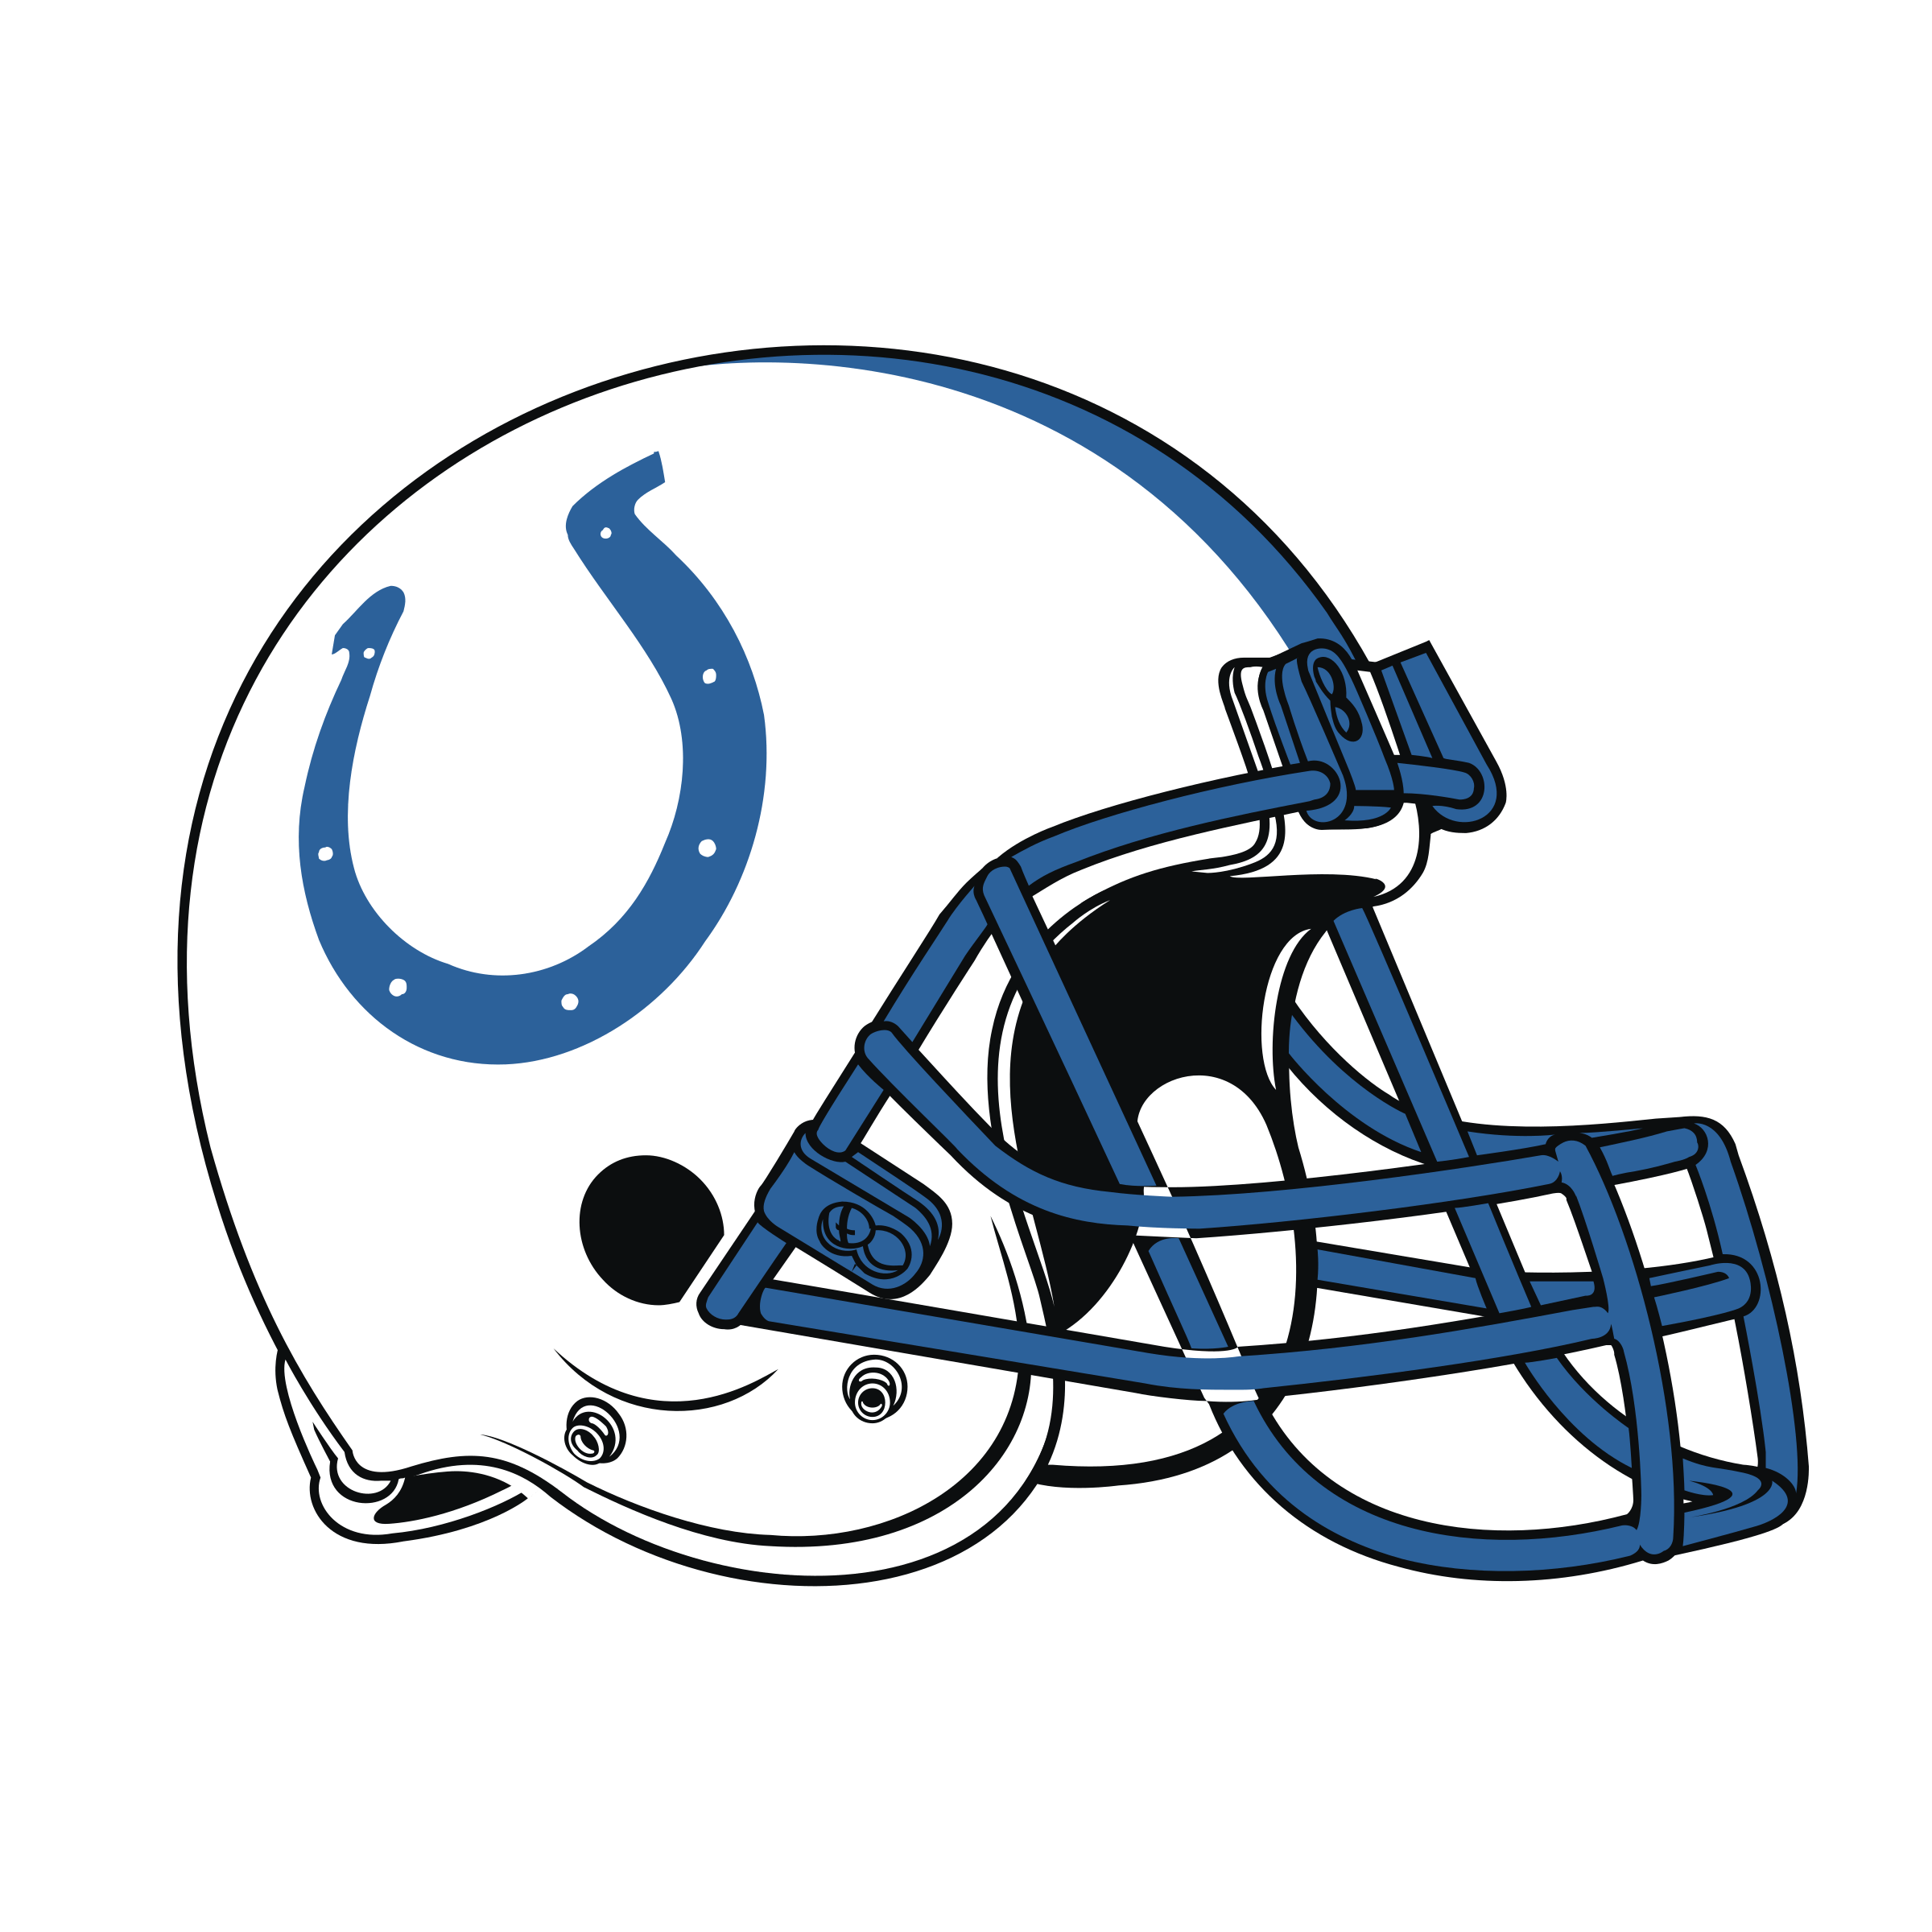 Colts Logo - Indianapolis Colts Logo SVG Vector & PNG Transparent Logo